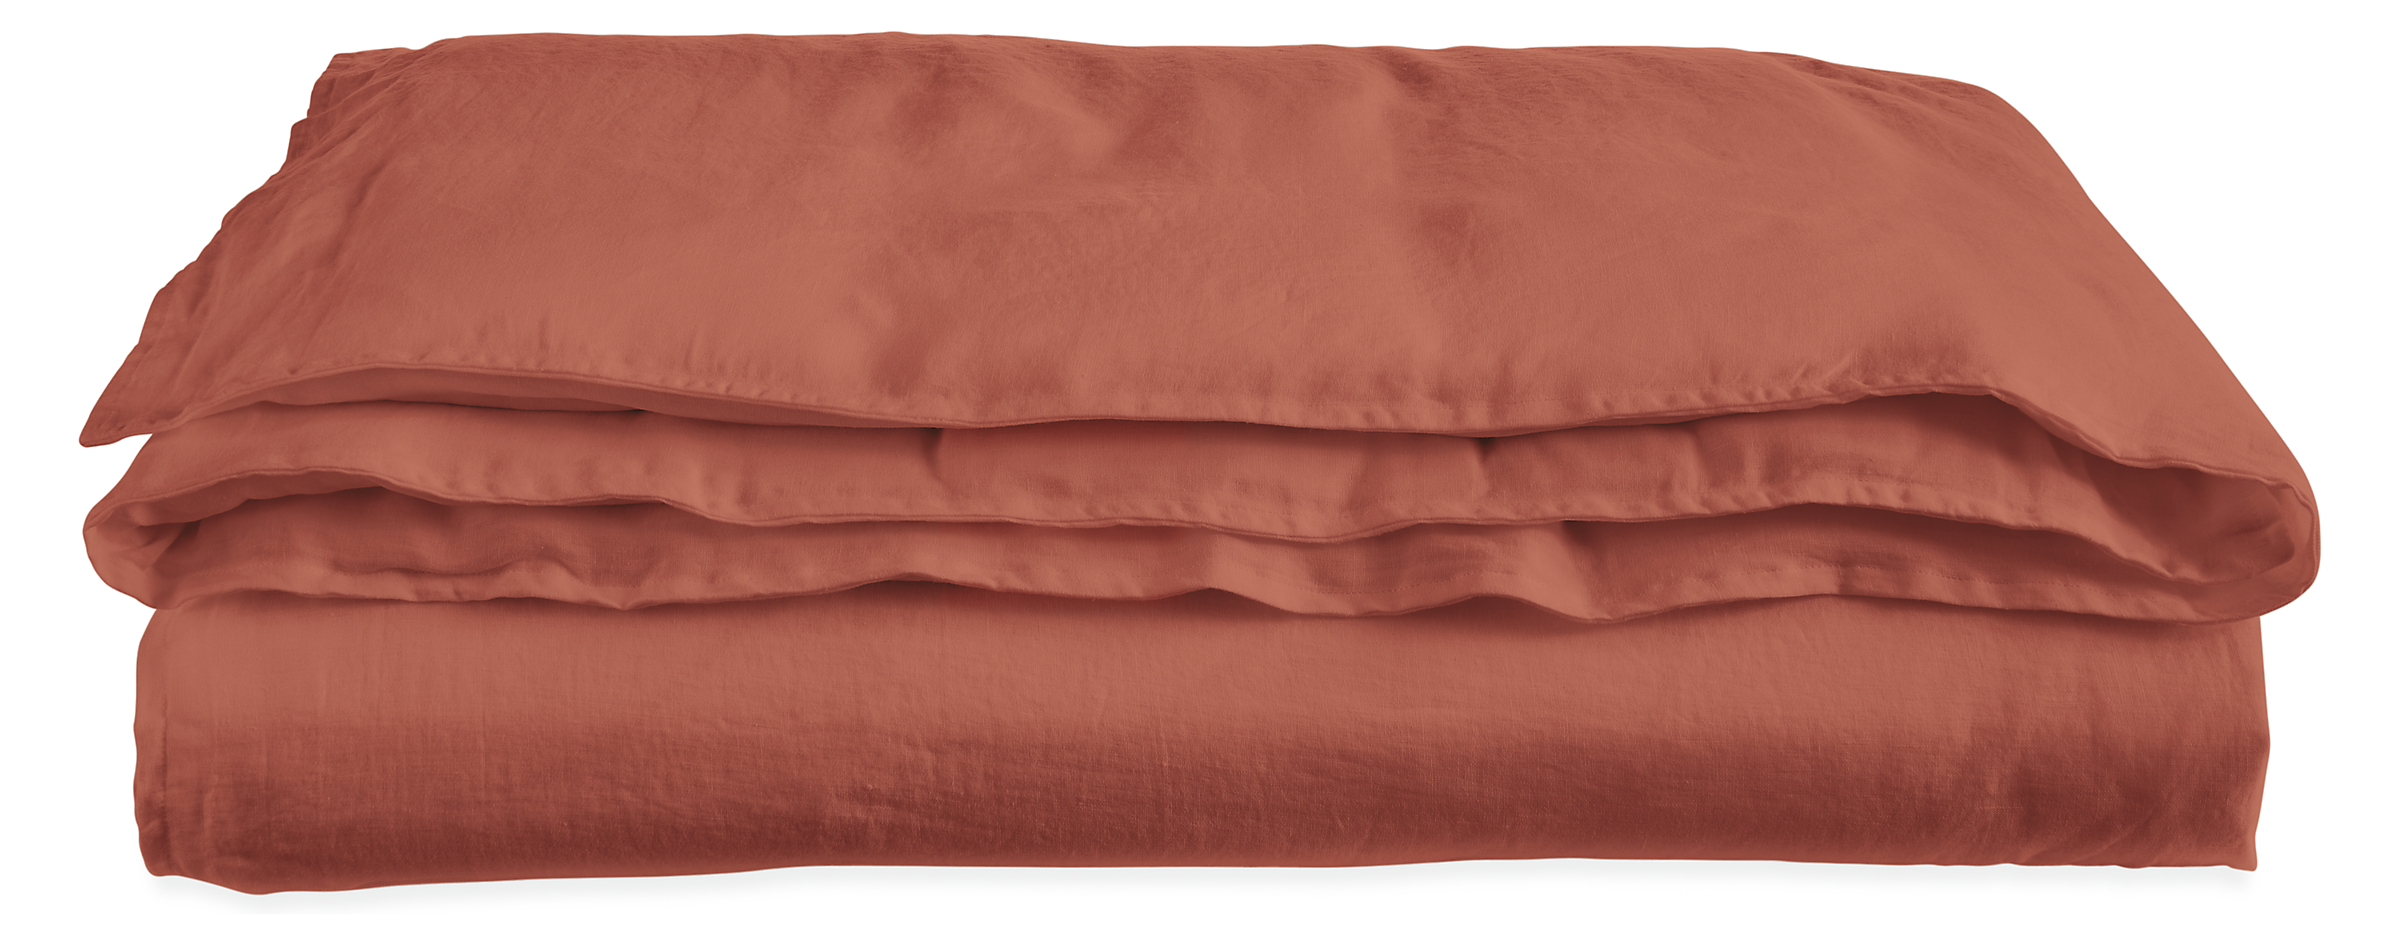 Relaxed Linen Full/Queen Duvet Cover in Brick